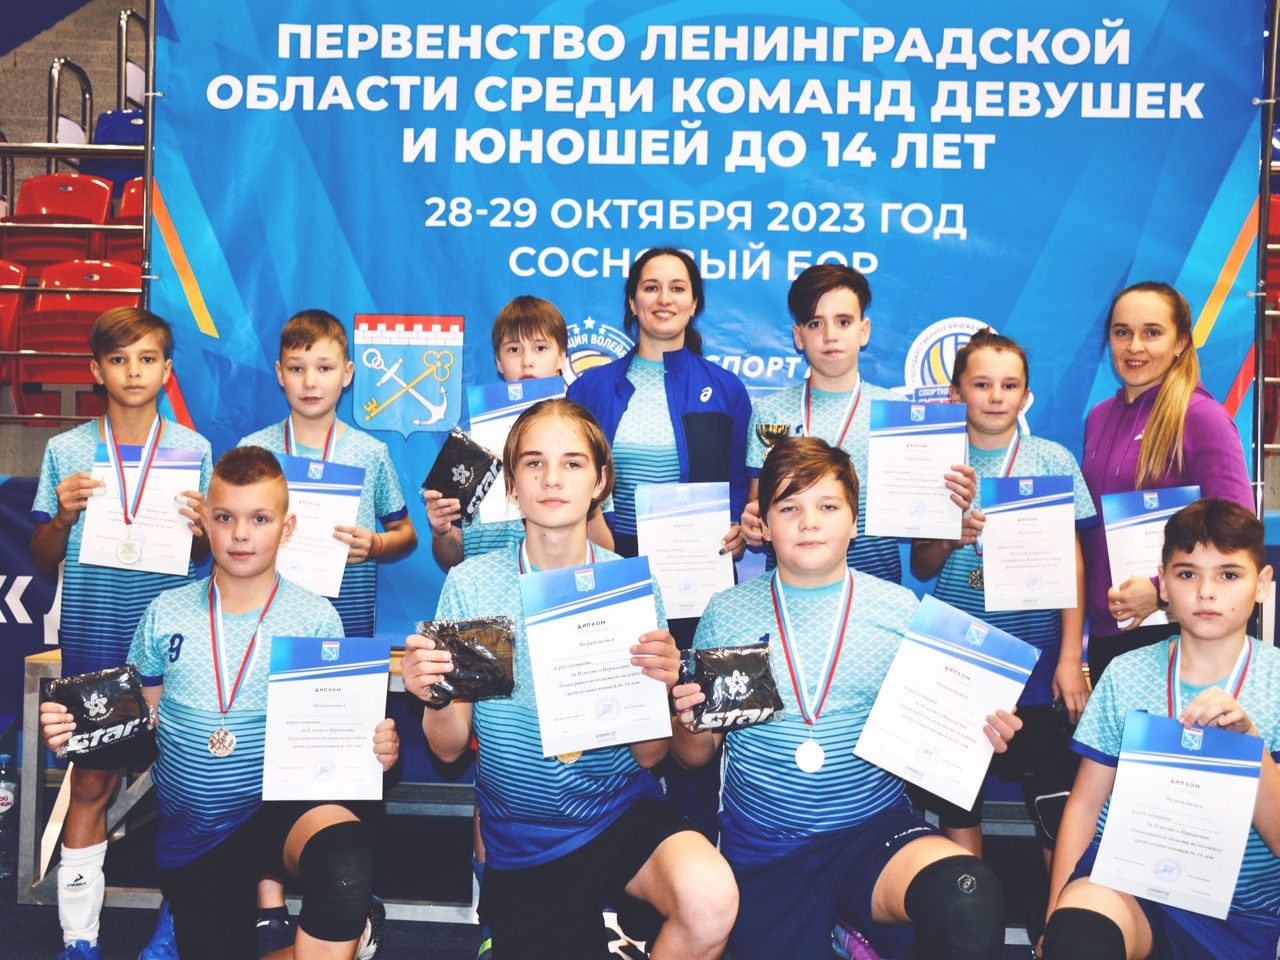 Районная команда по волейболу взяла серебро на первенстве Ленобласти 